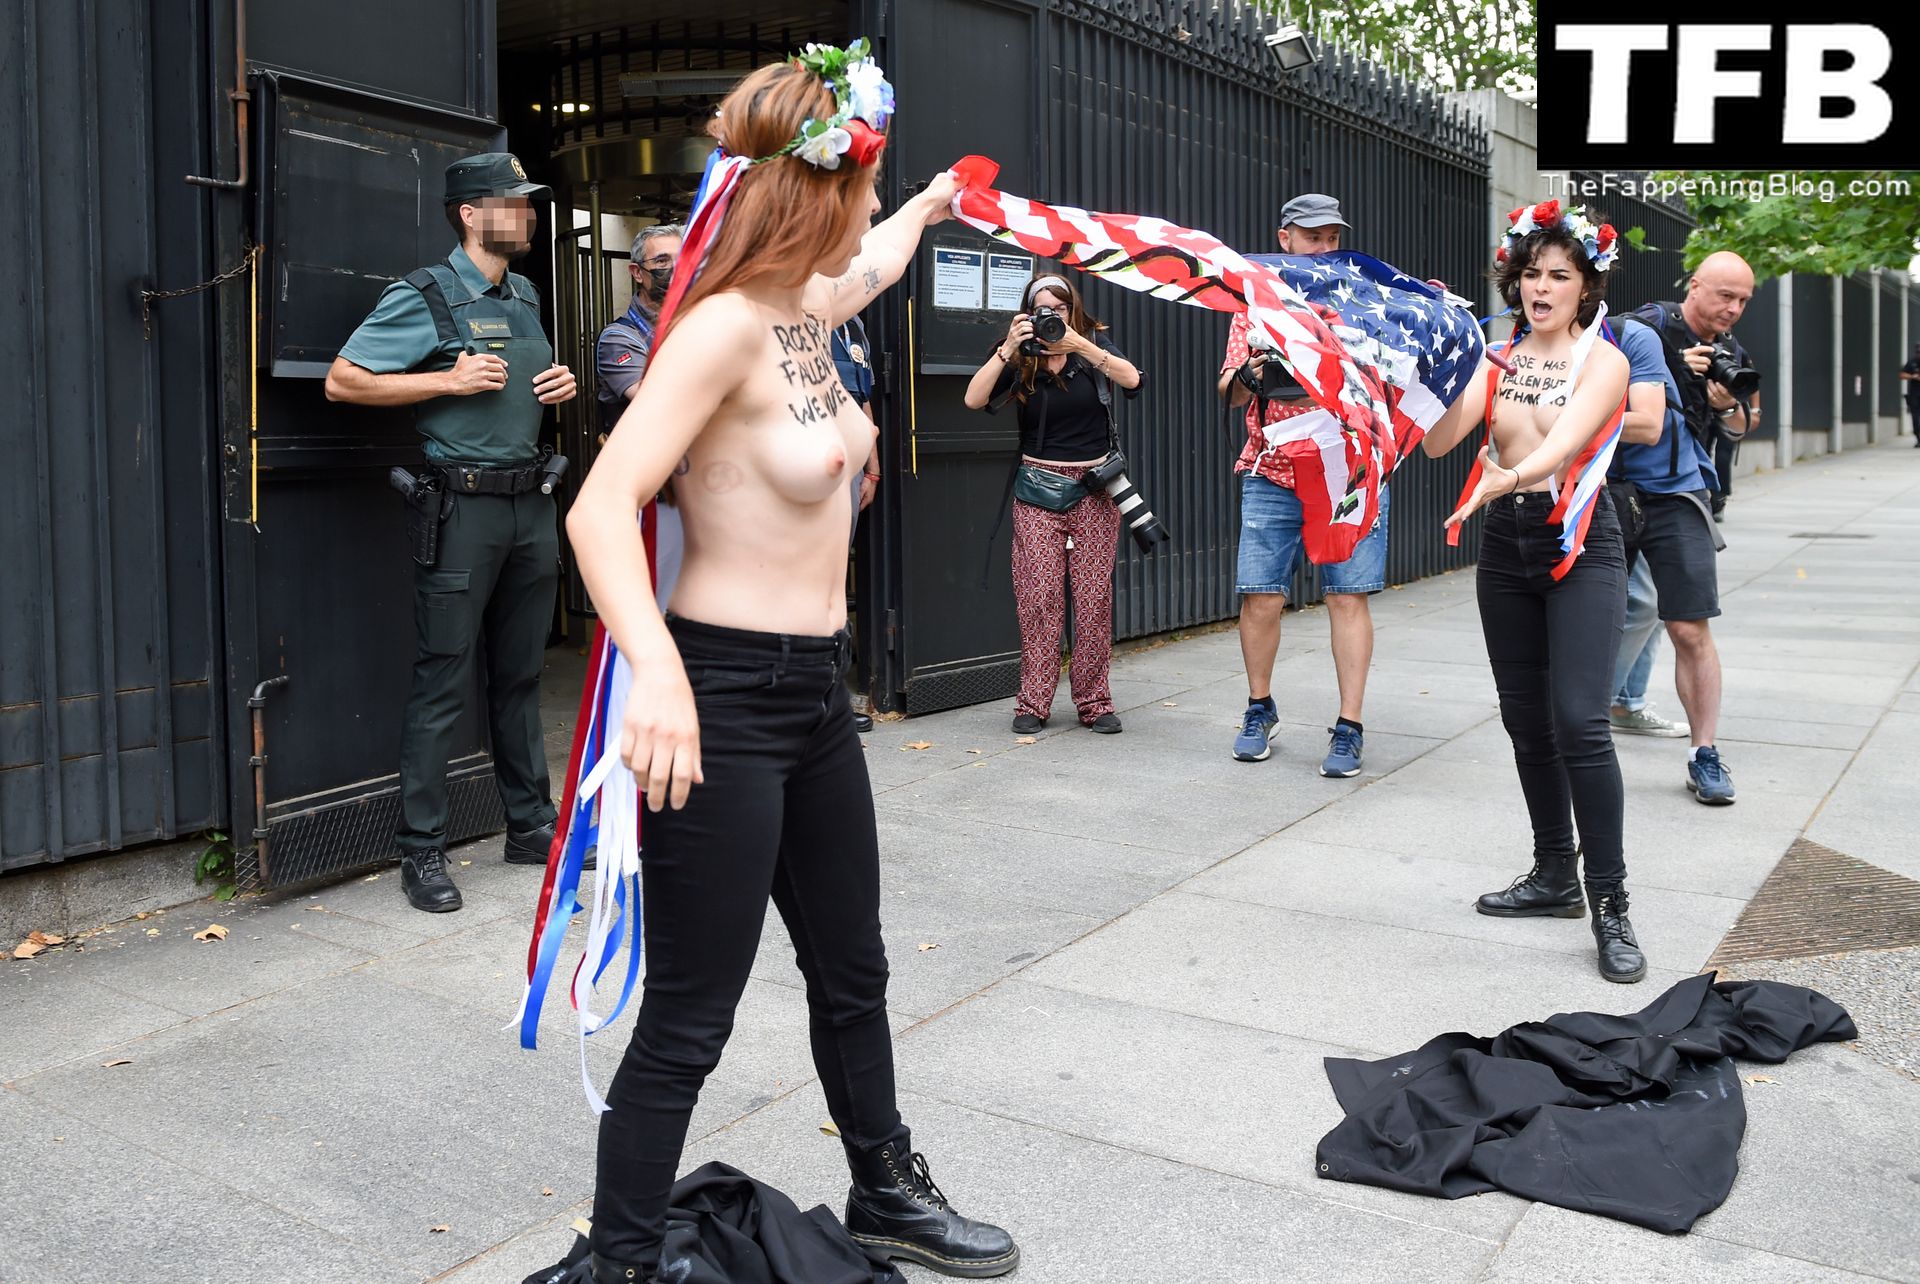 Femen-Nude-The-Fappening-Blog-3.jpg